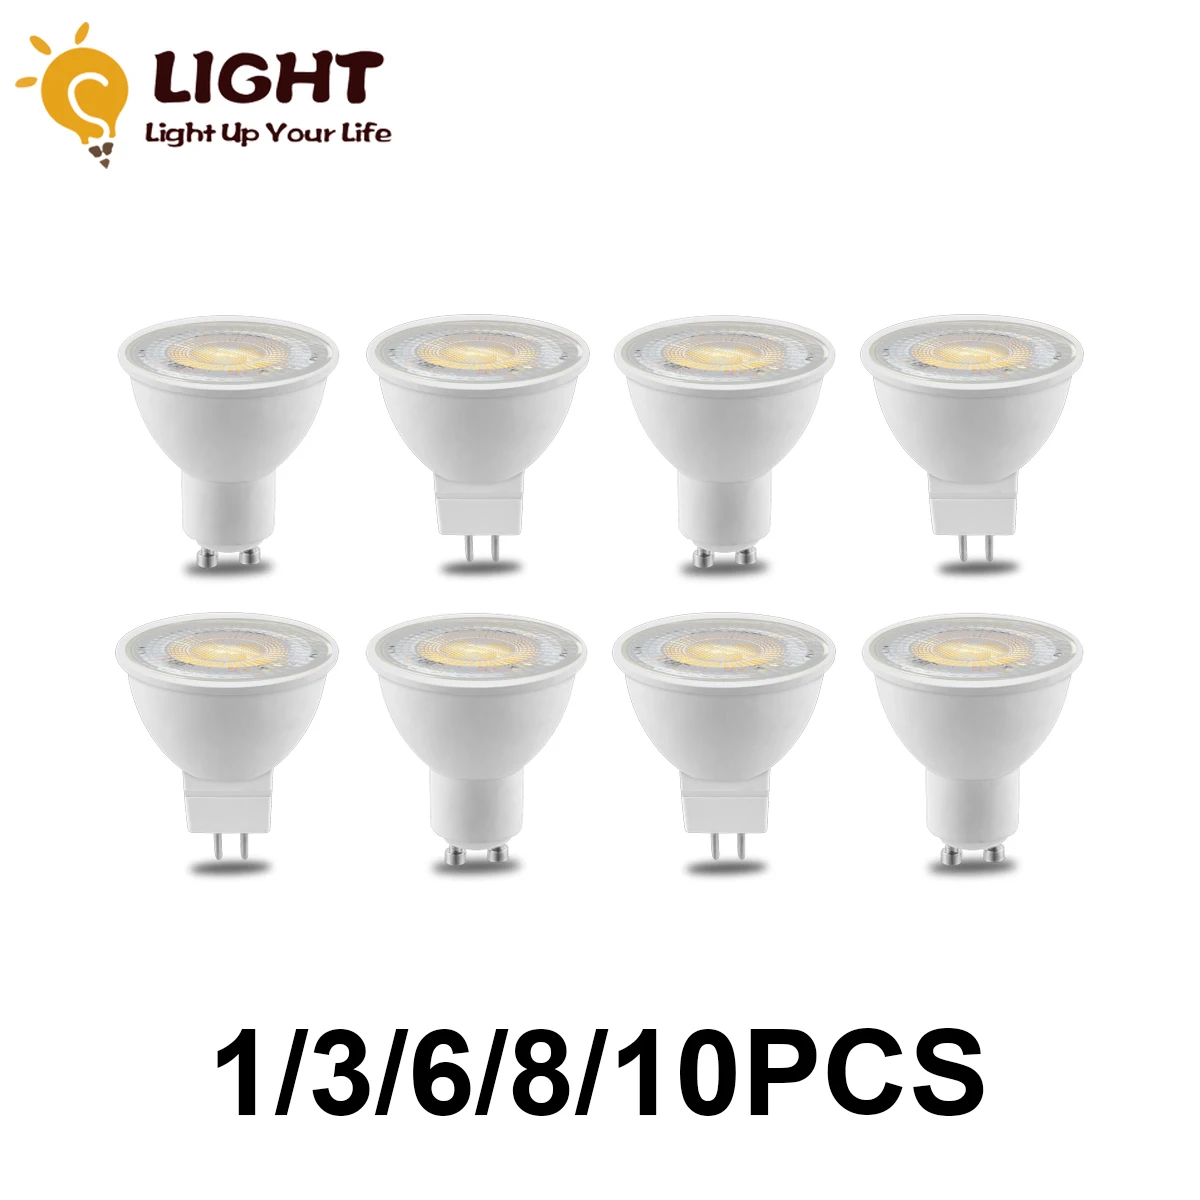 

1-10PCS GU10 GU5.3 LED Lamp Spotlight Bulb 38 Degree lampara 220V GU 10 bombillas led MR16 Lampada Spot light 3W 5W 6W 7W